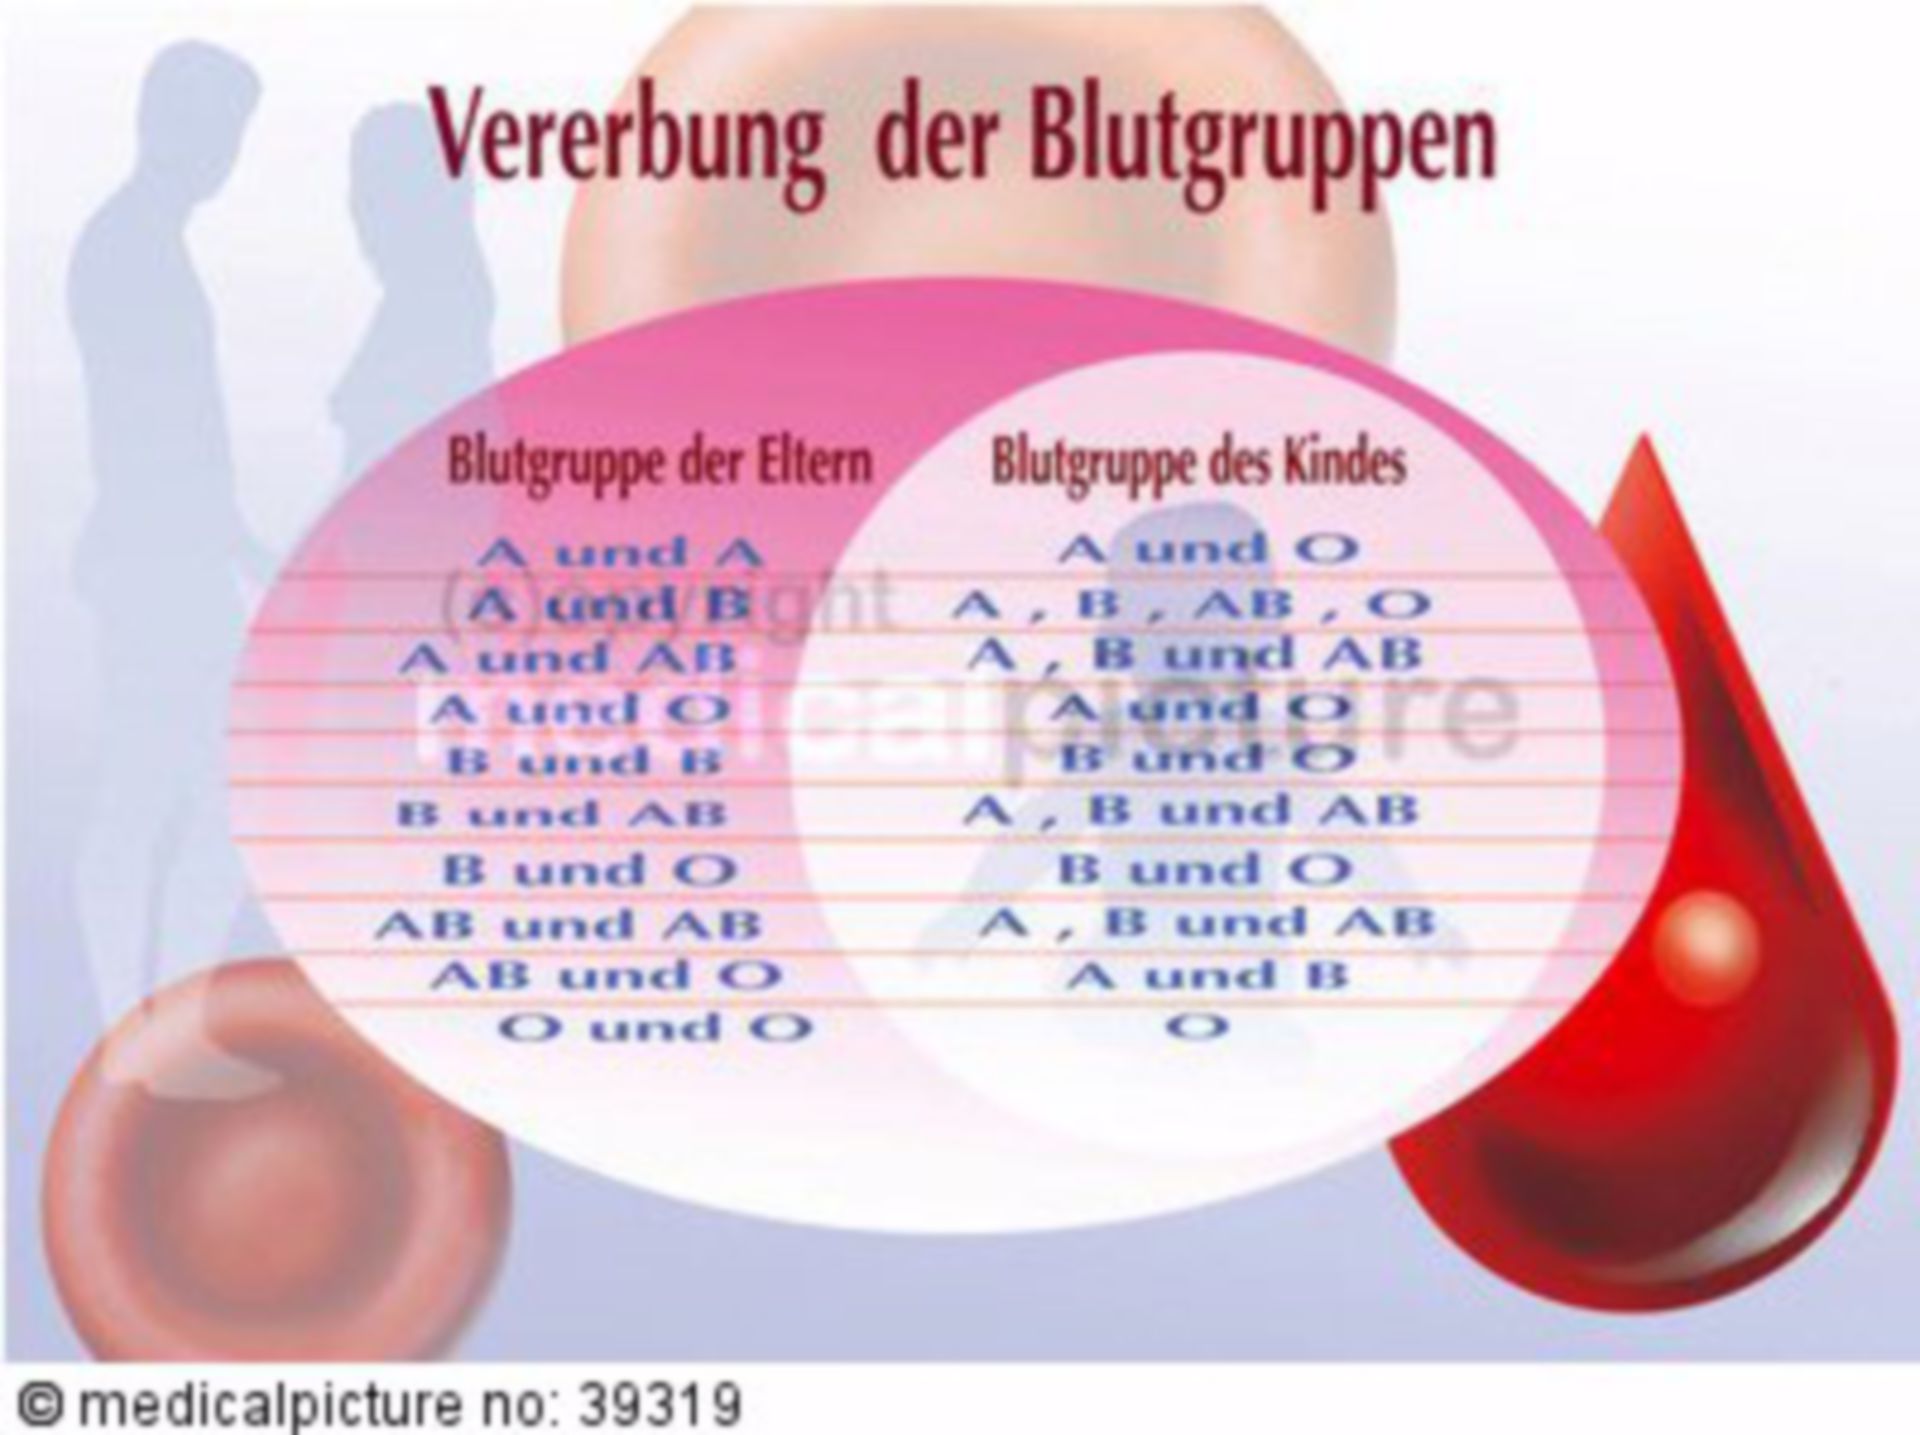  Blutgruppentypen, Vererbung, blood types,  hereditary 
